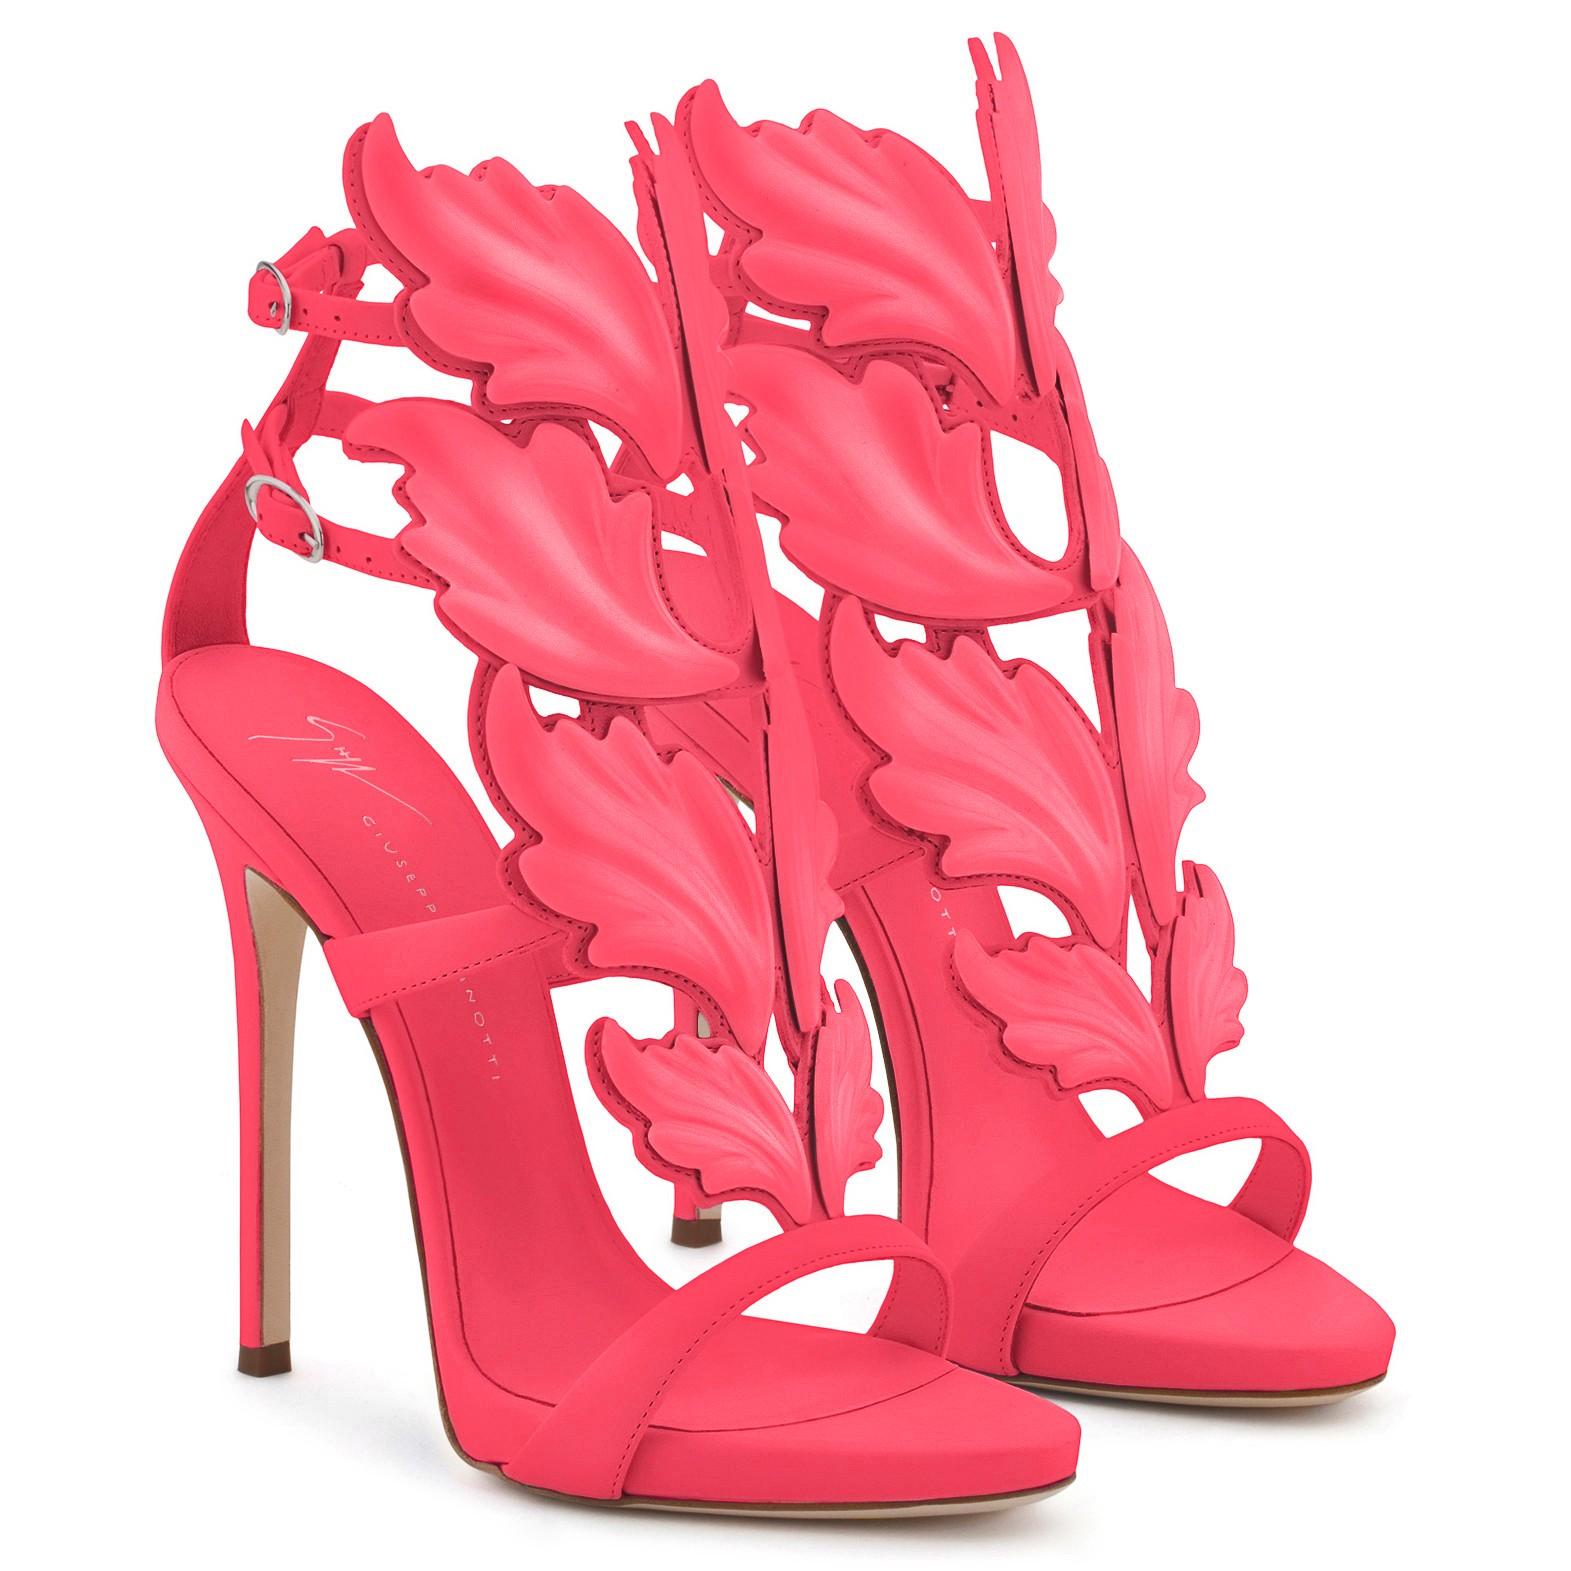 Giuseppe Zanotti NEW Coral Pink Leather Metal Evening Sandals Heels in Box Damen